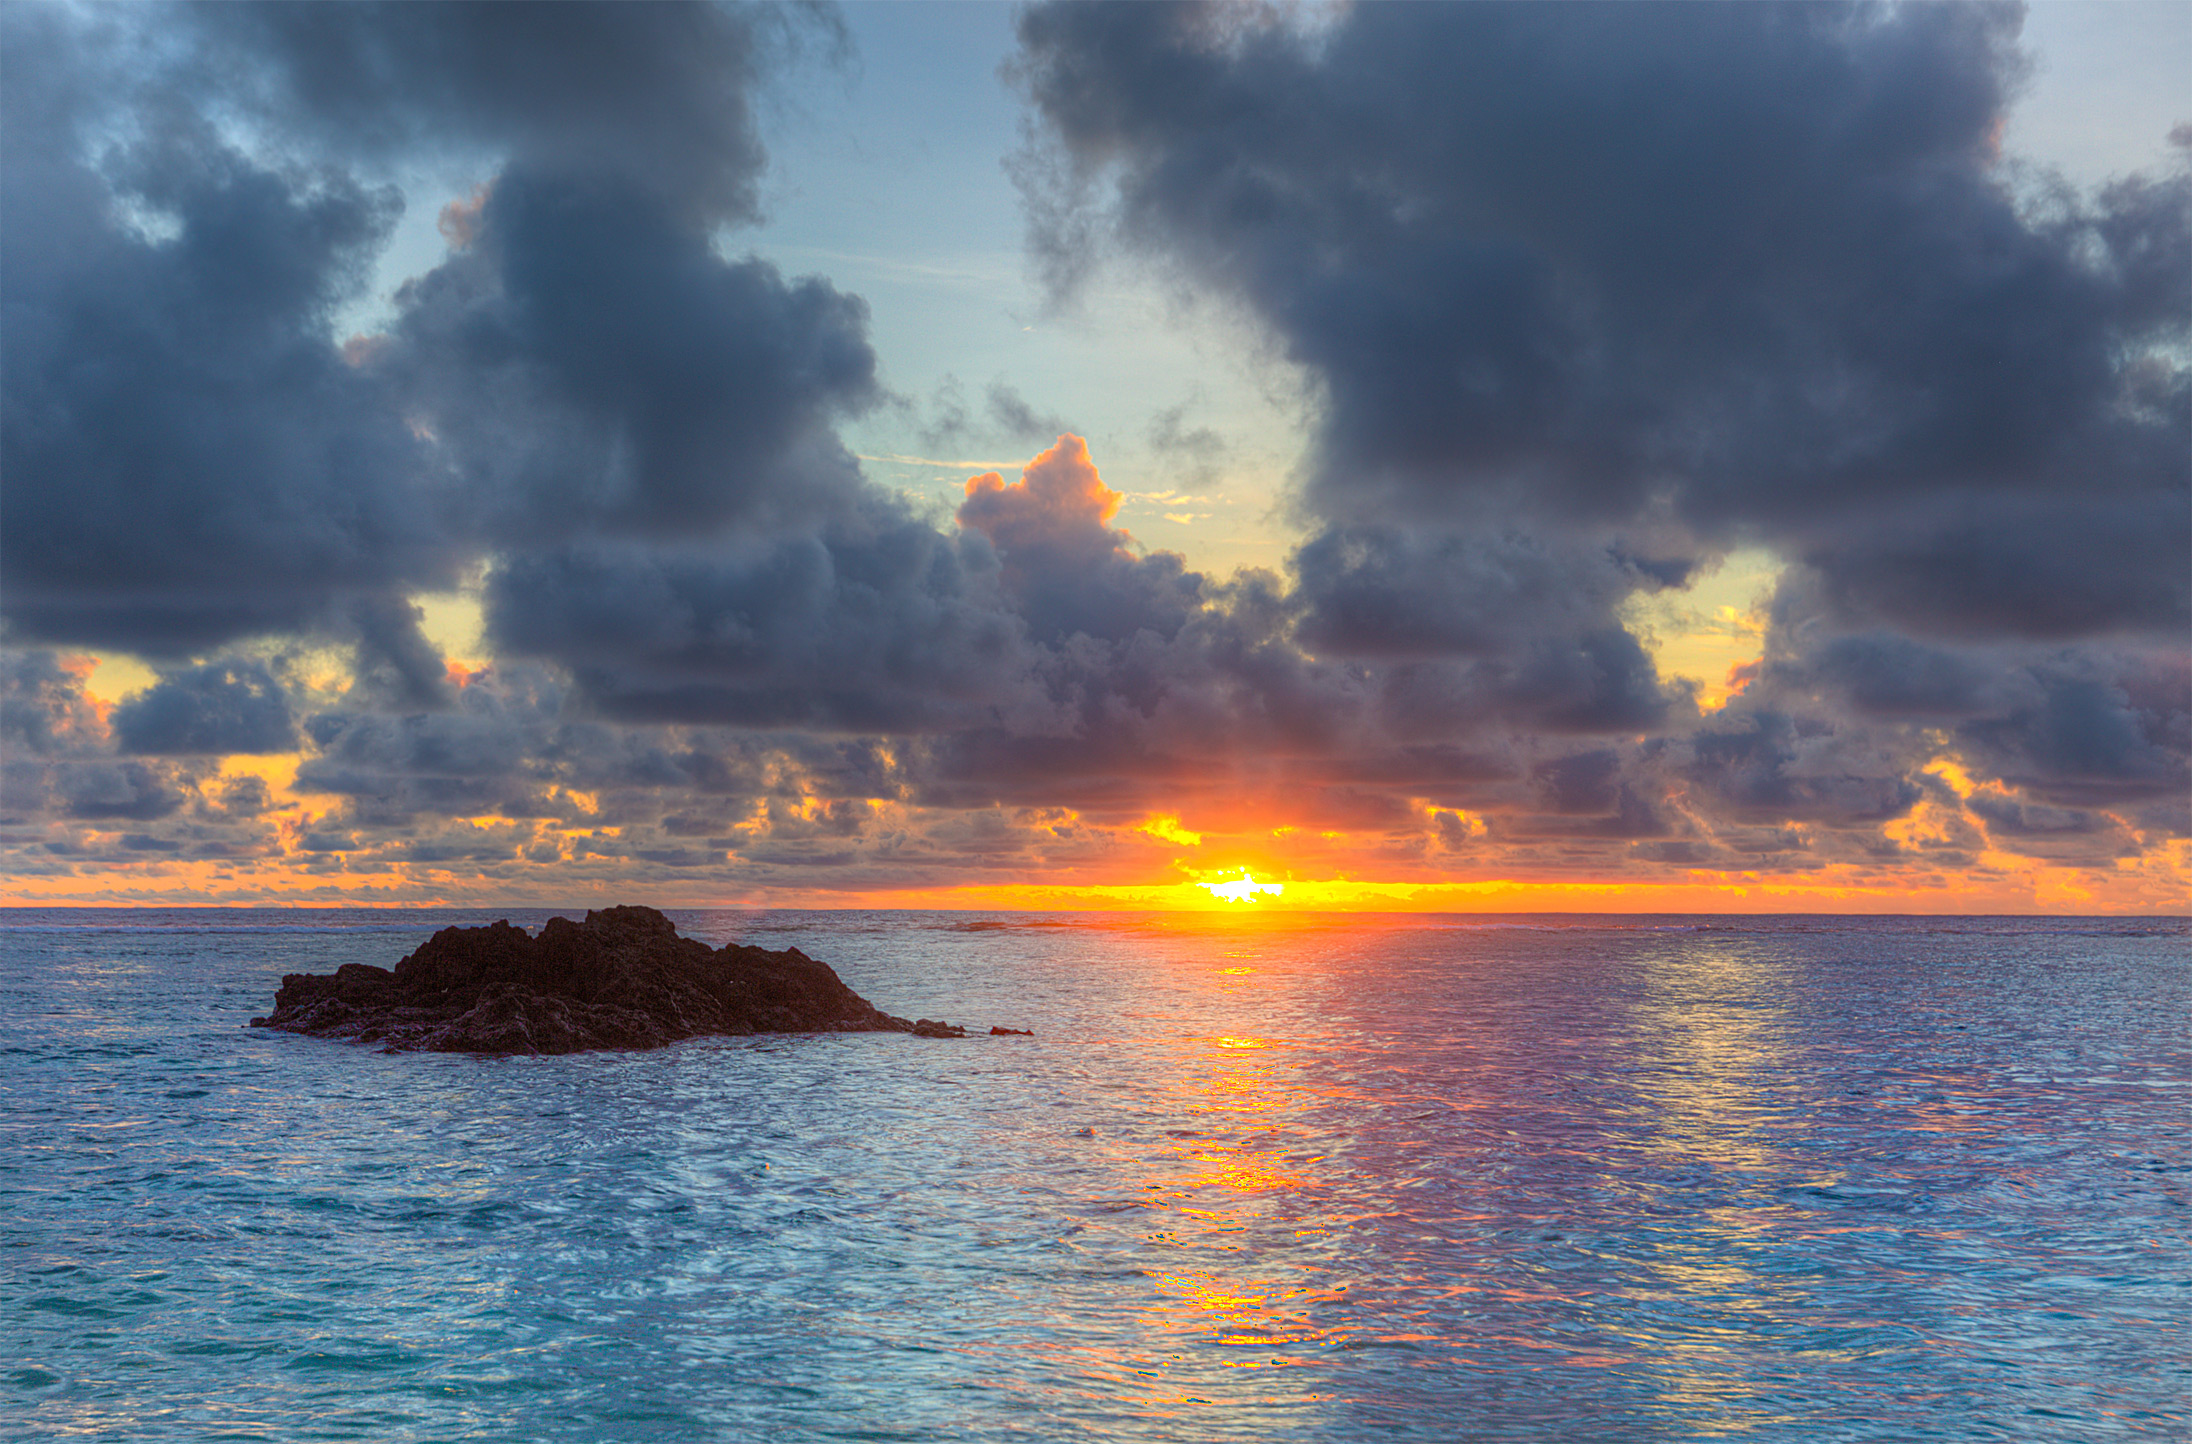 The sun rises in American Samoa